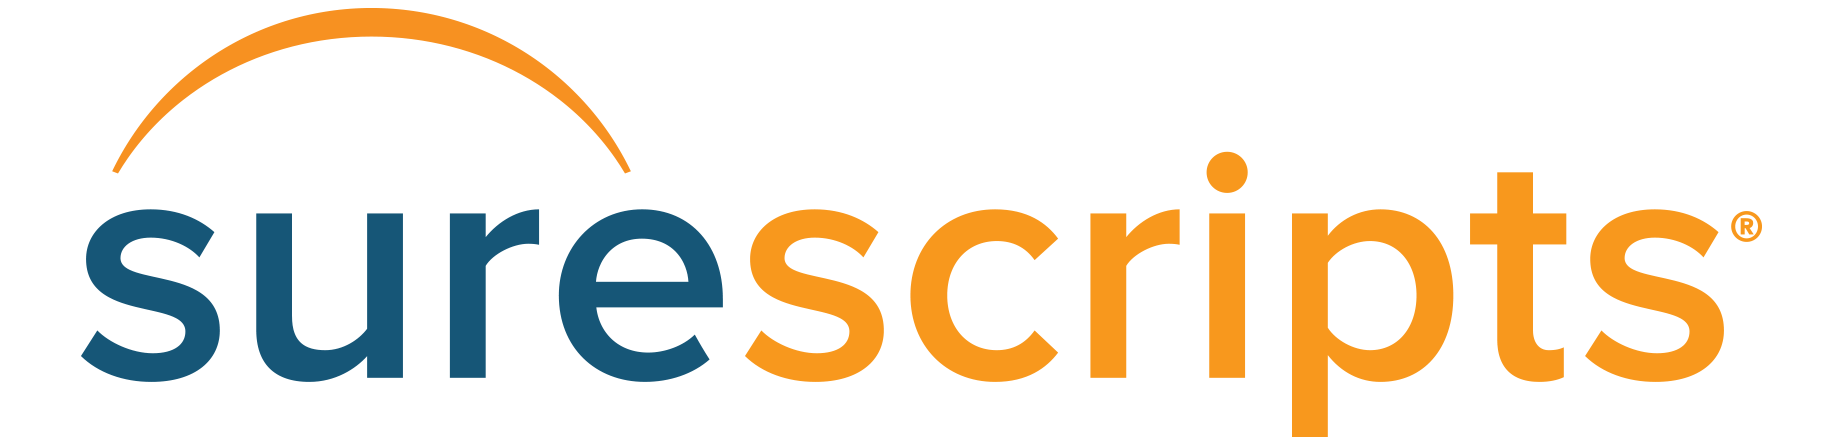 Surescripts Logo - Surescripts Competitors, Revenue and Employees Company Profile